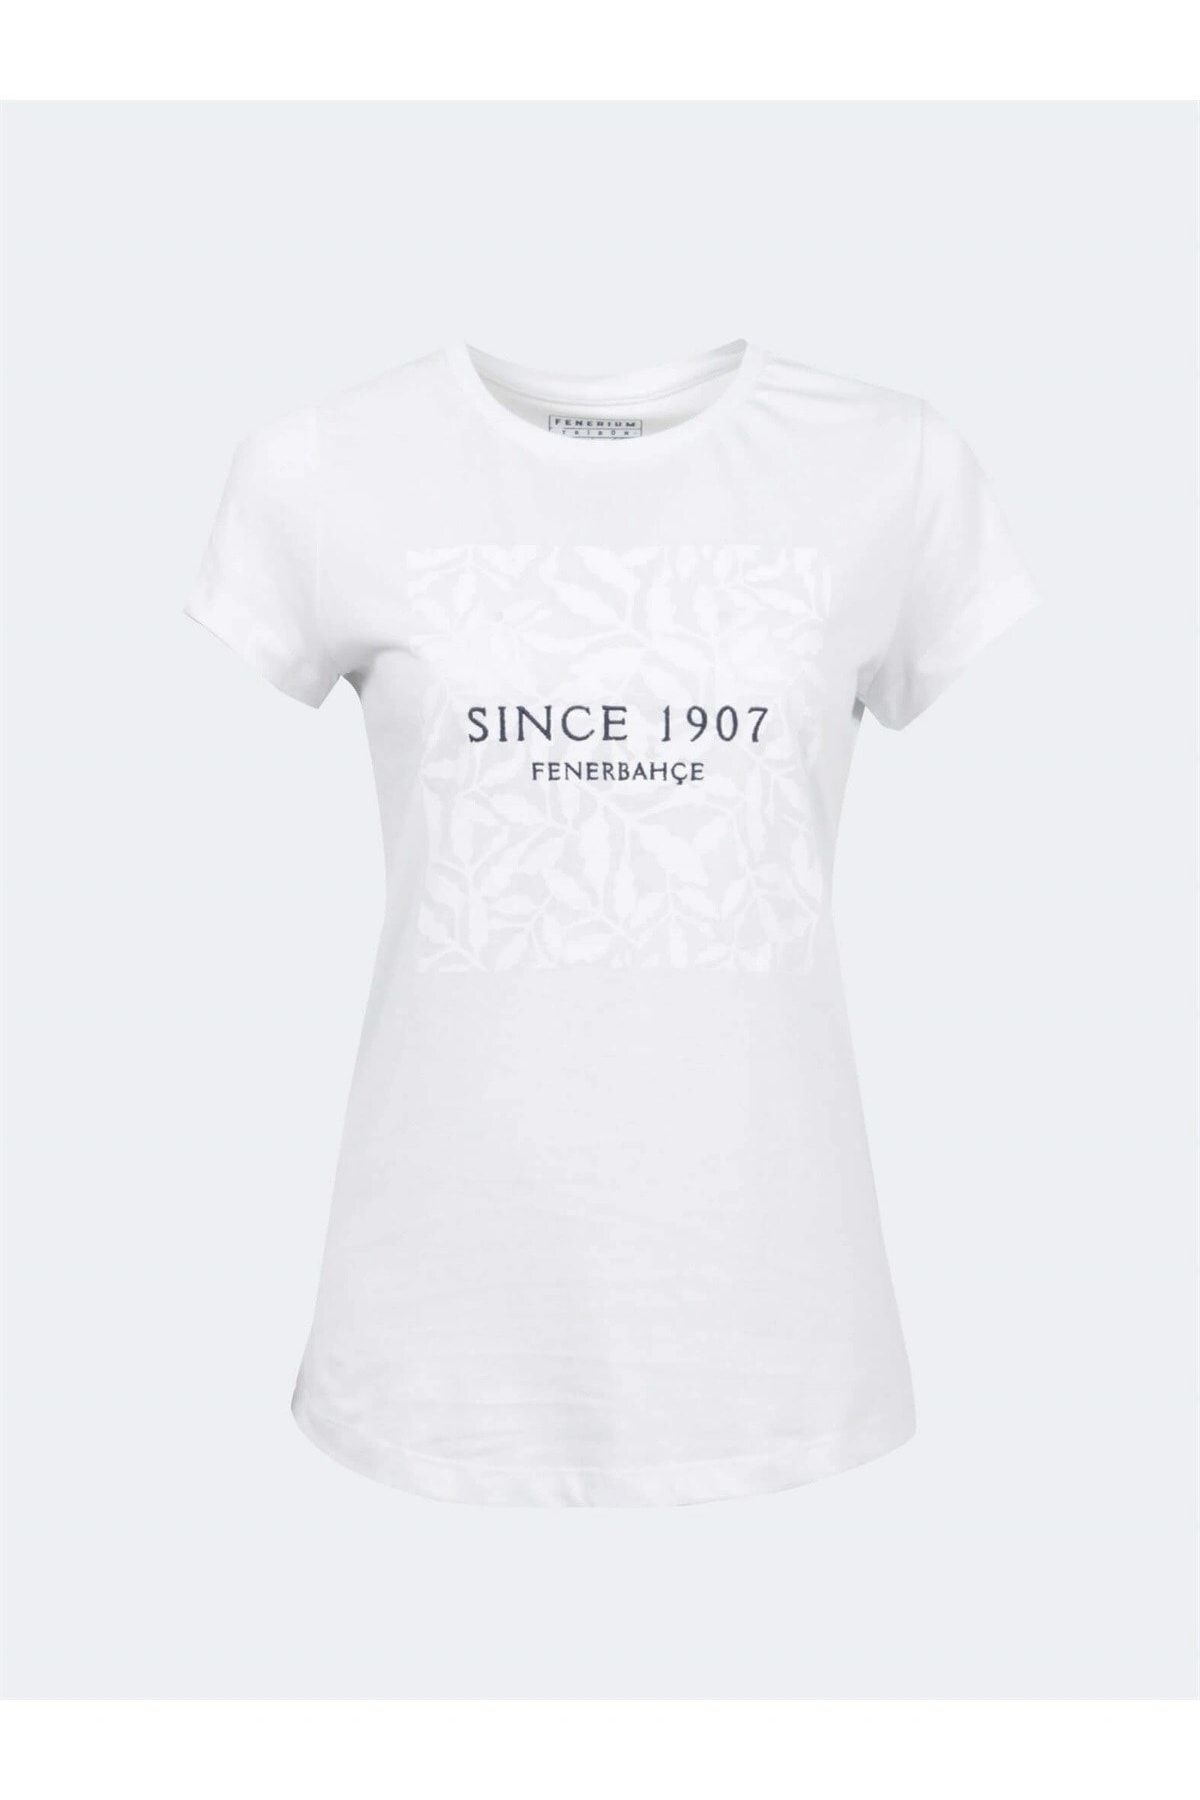 Fenerbahçe Kadın Tribun Palamut T-shirt